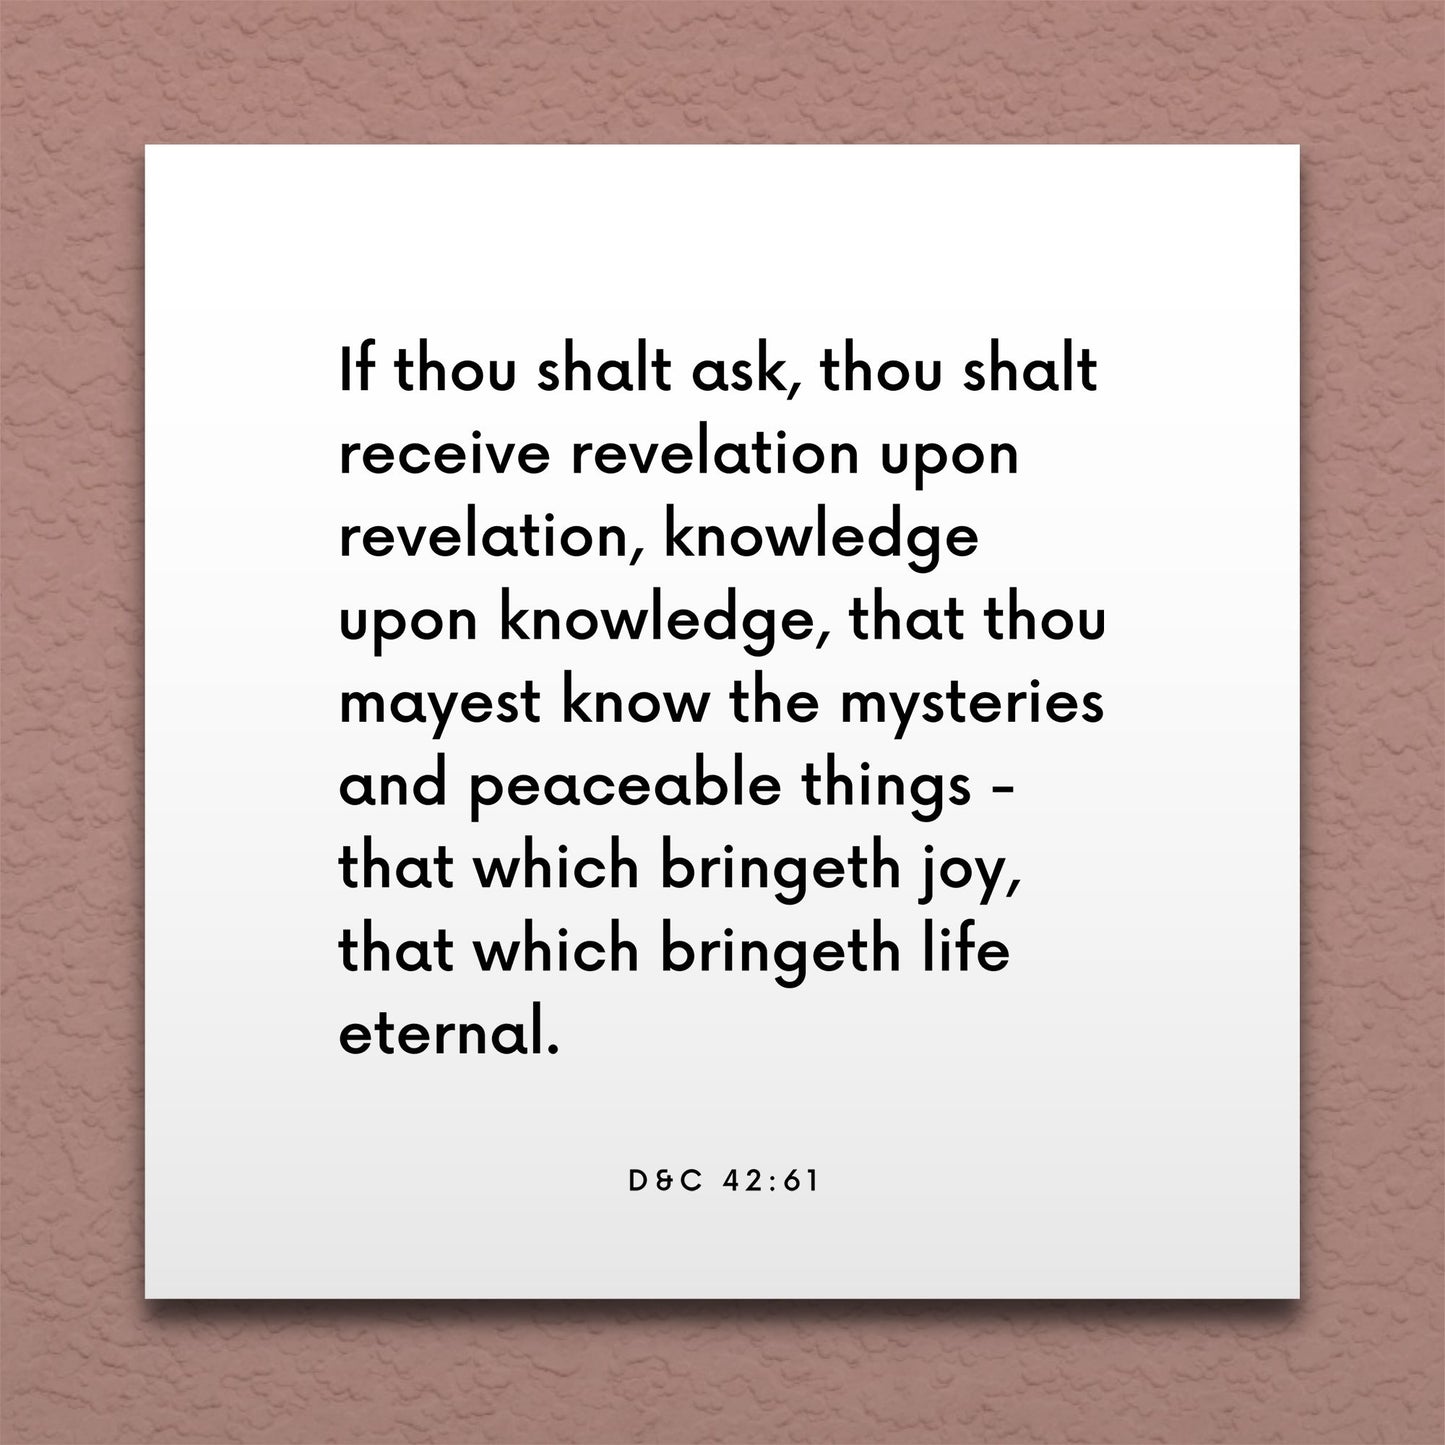 Wall-mounted scripture tile for D&C 42:61 - "If thou shalt ask, thou shalt receive revelation"